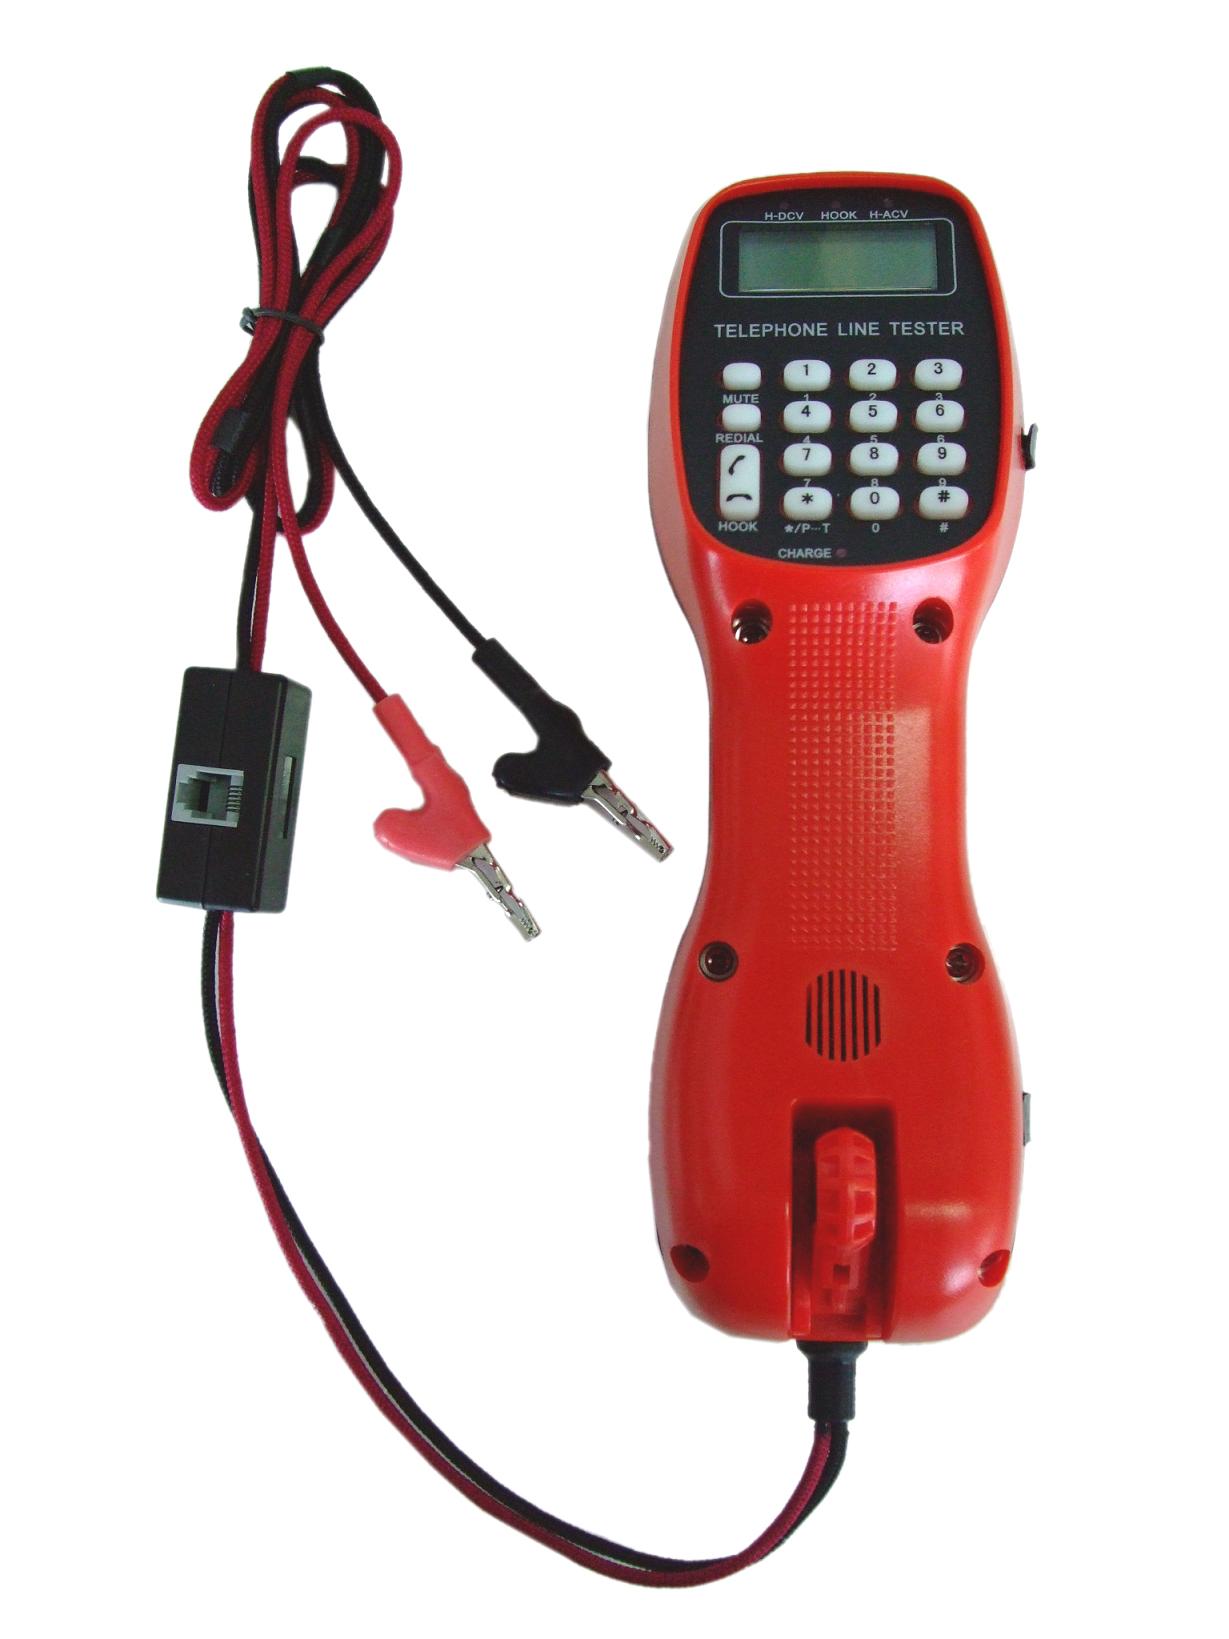 ST-2300 Telephone Line Tester